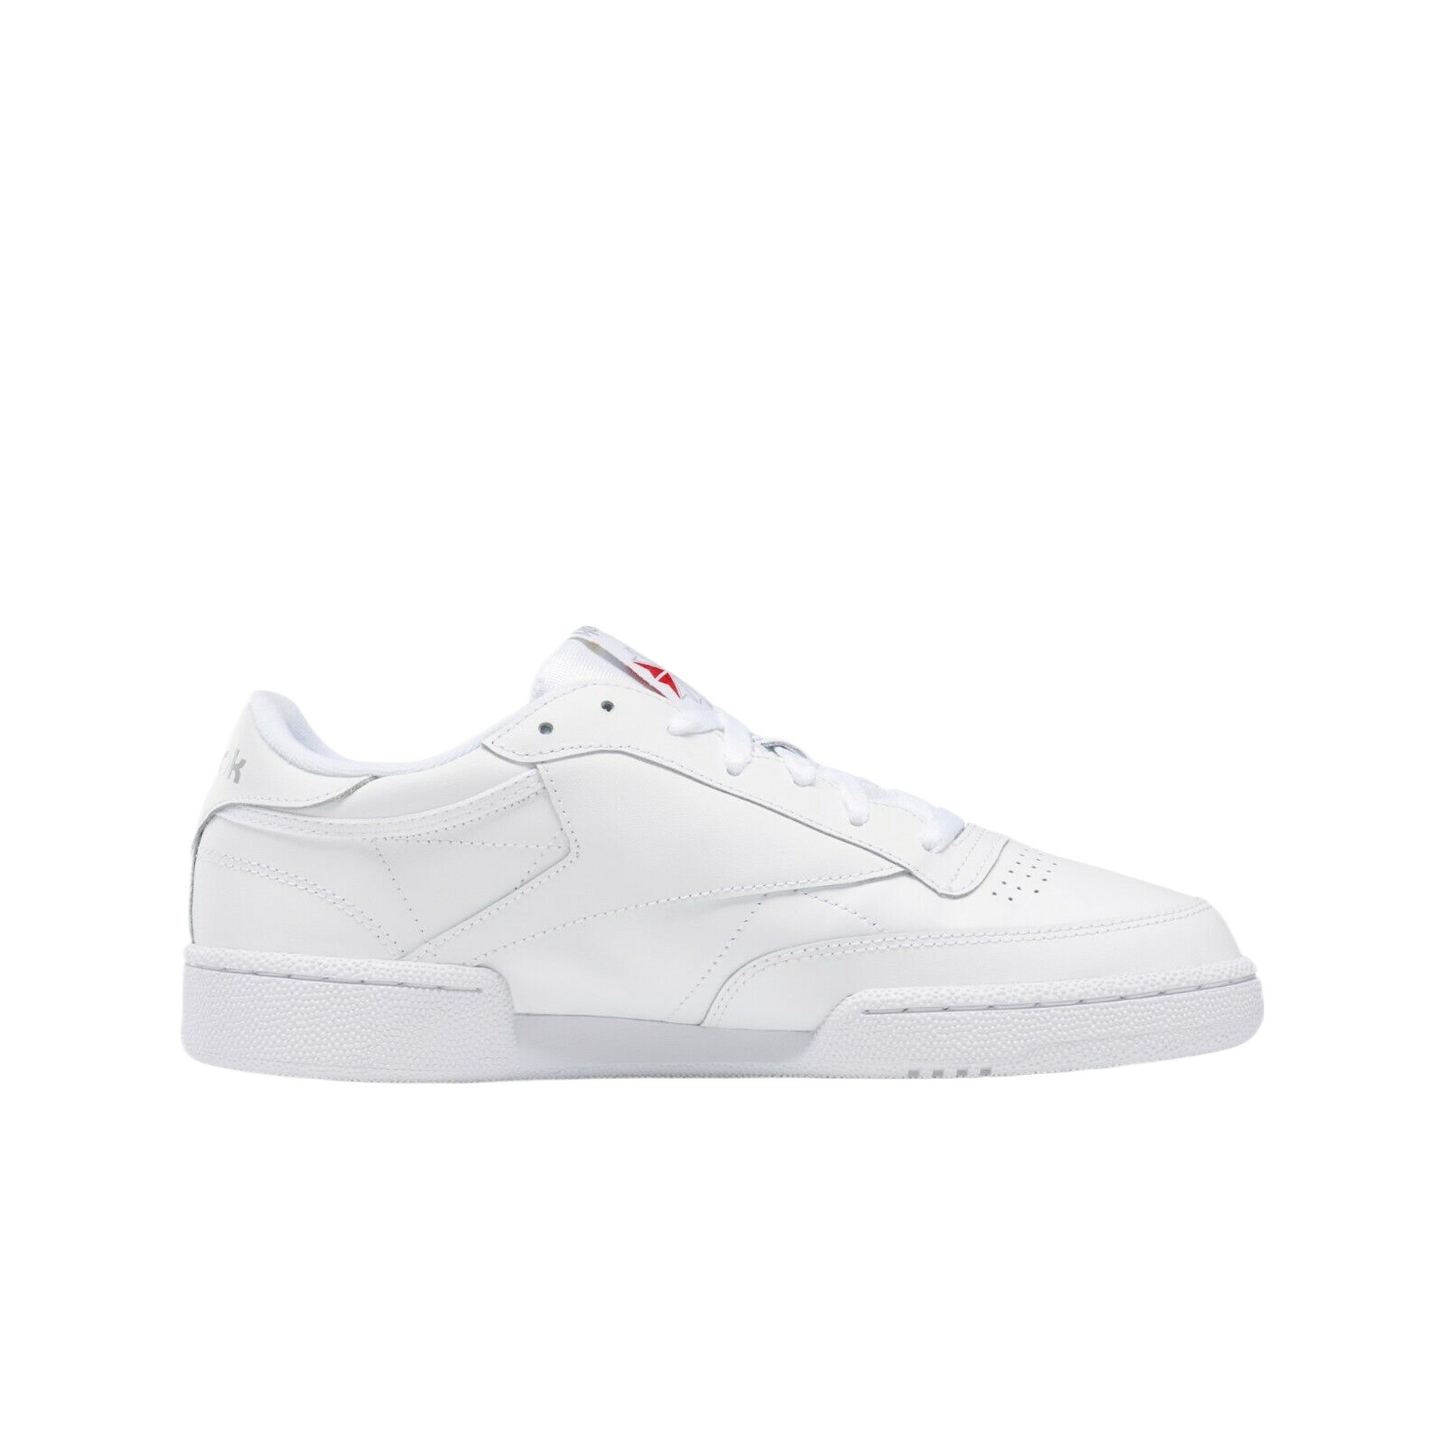 Reebok Men's Club C 85 Shoes White / Sheer Grey AR0455